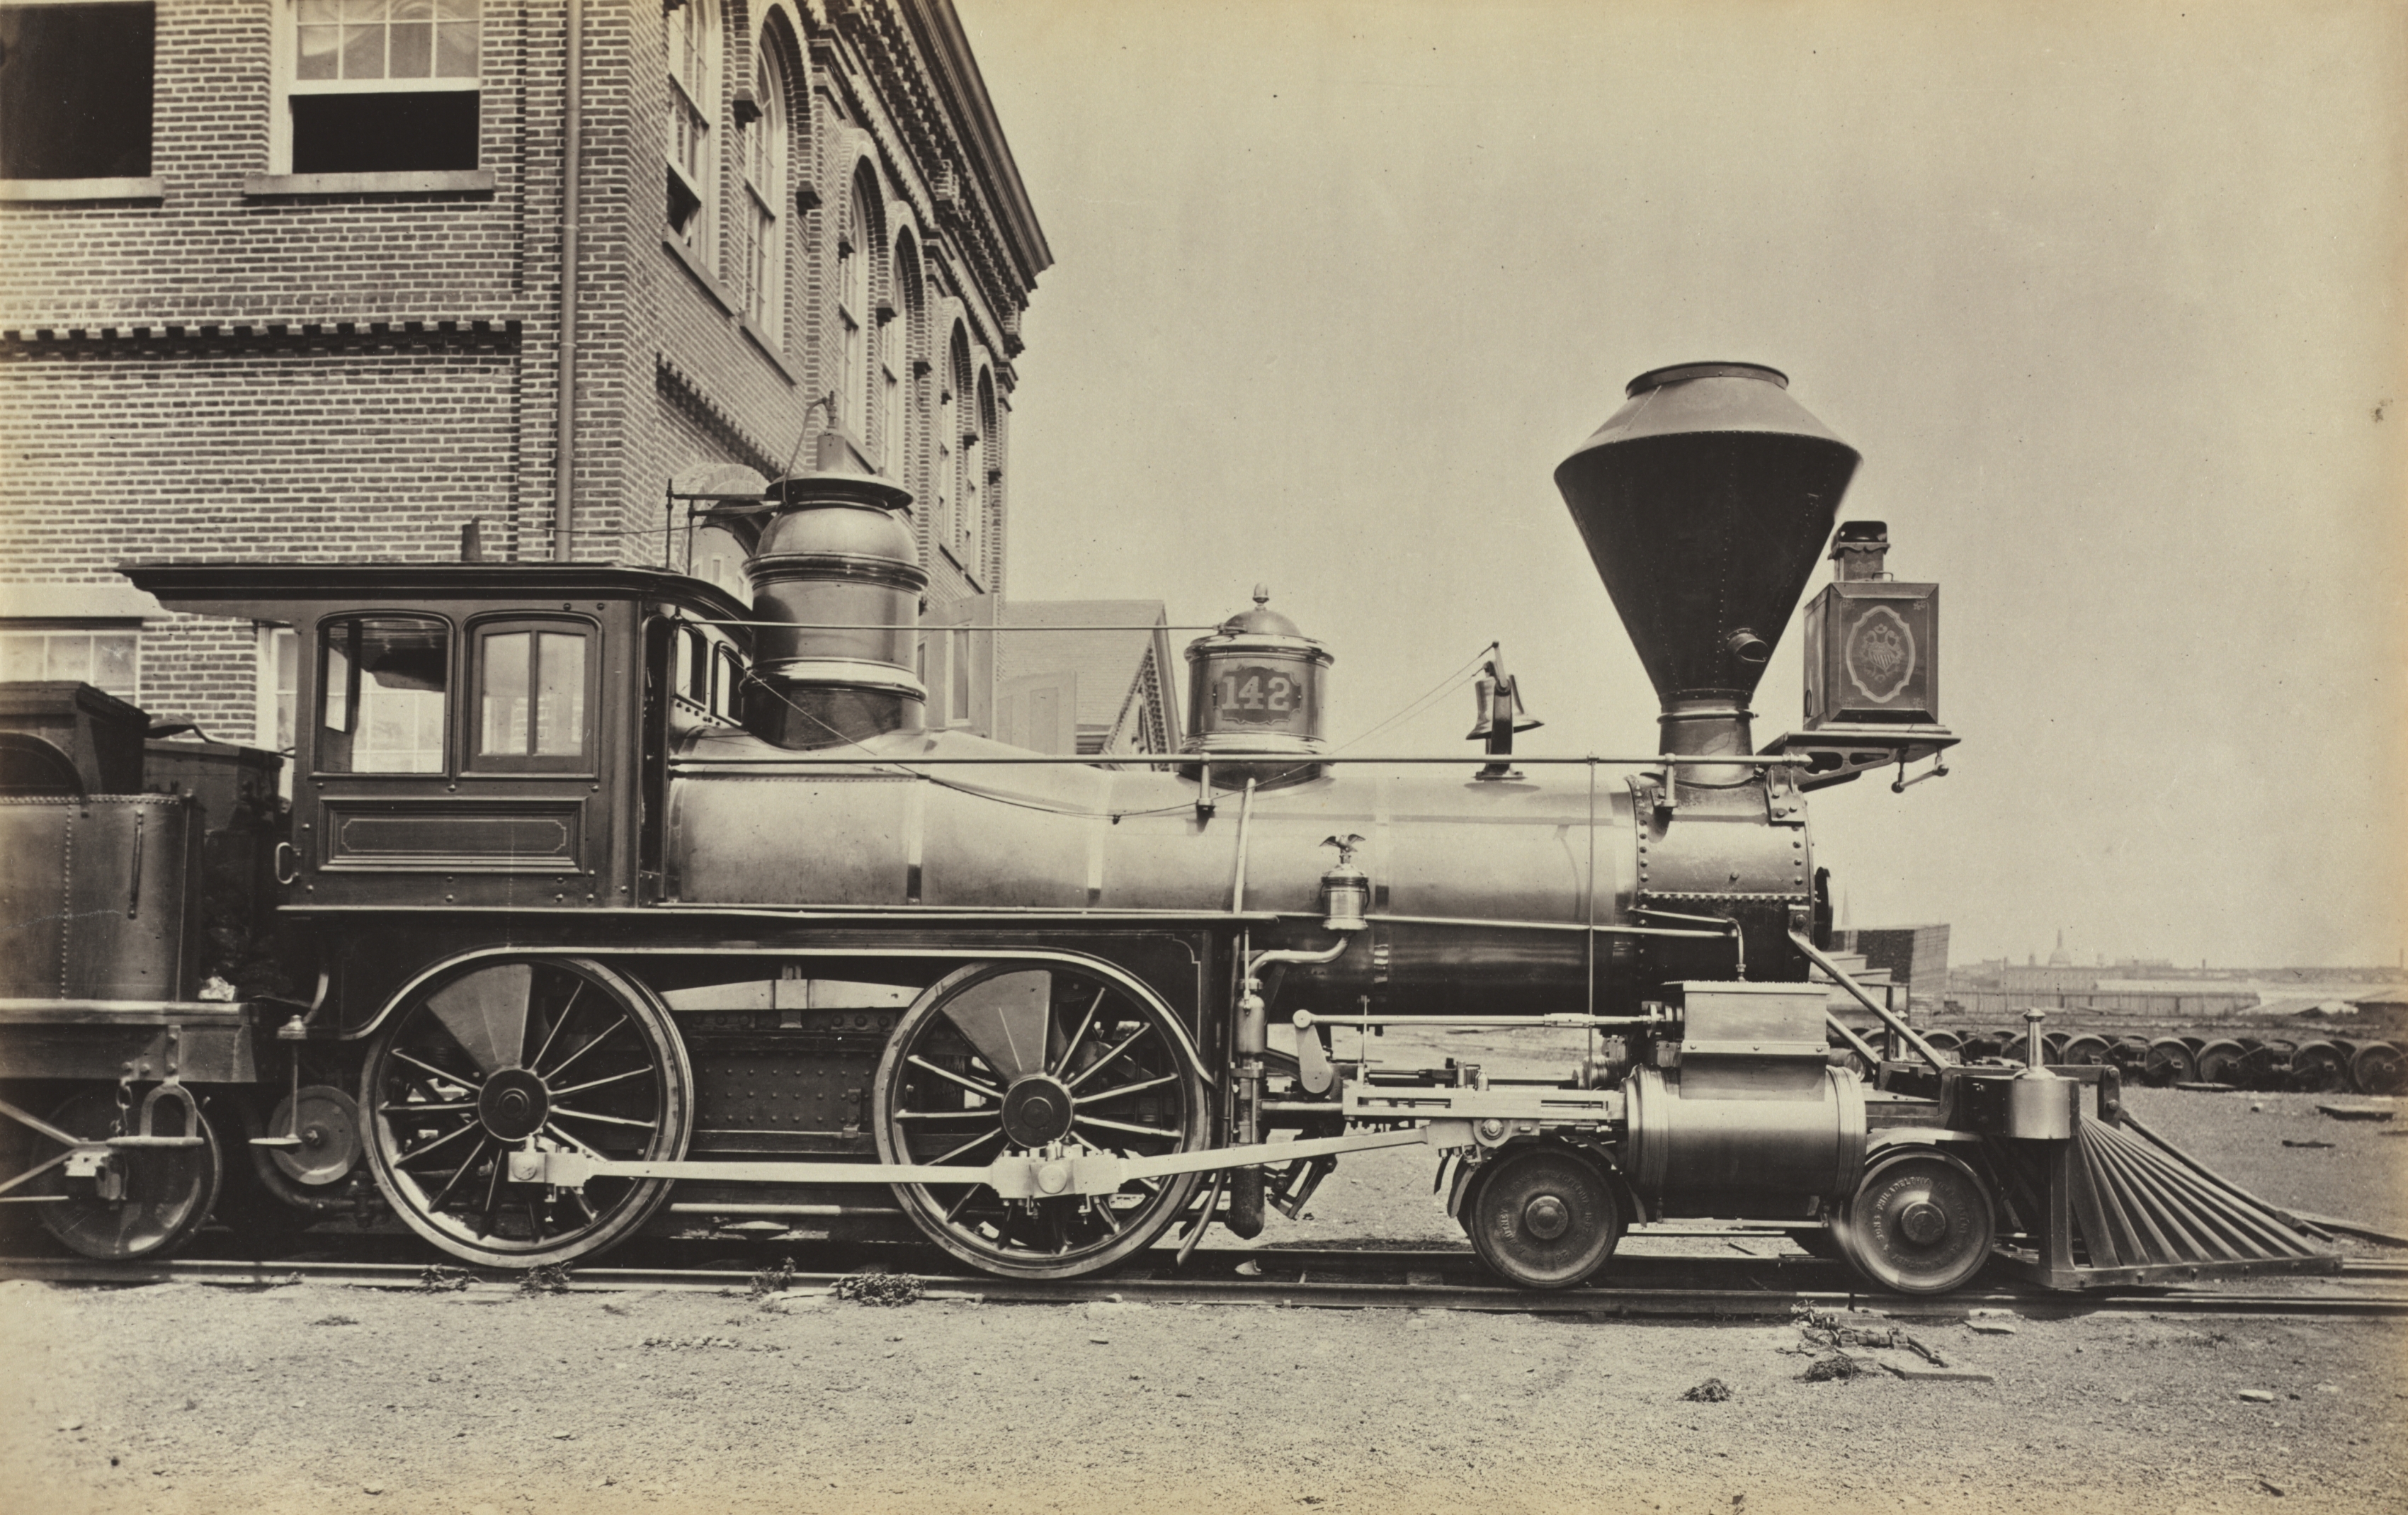 Untitled (Pennsylvania Railroad Engine)